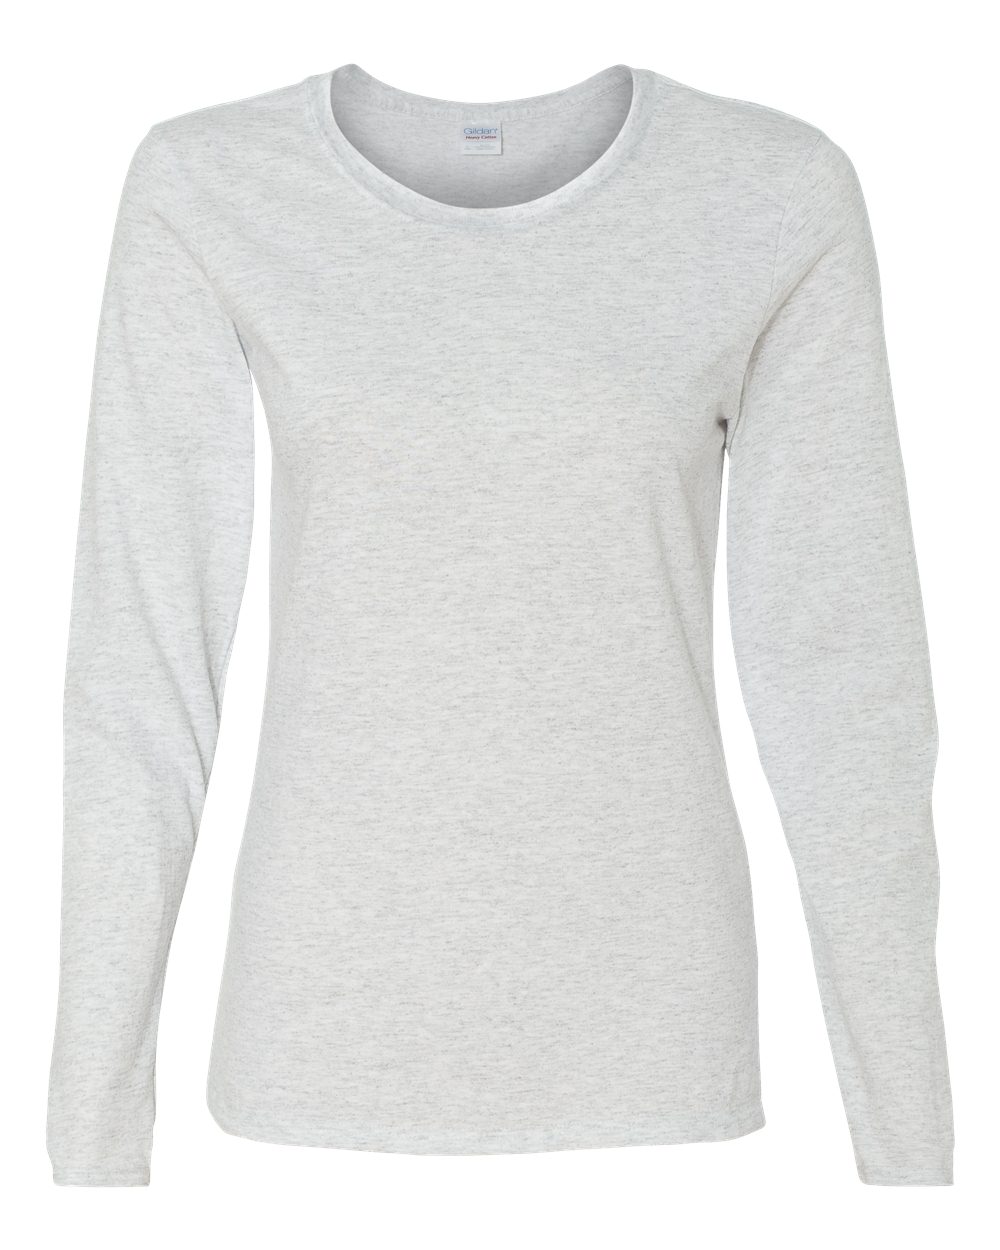 Gildan 5400L - Missy-Fit Heavy Cotton Long Sleeve T-Shirt